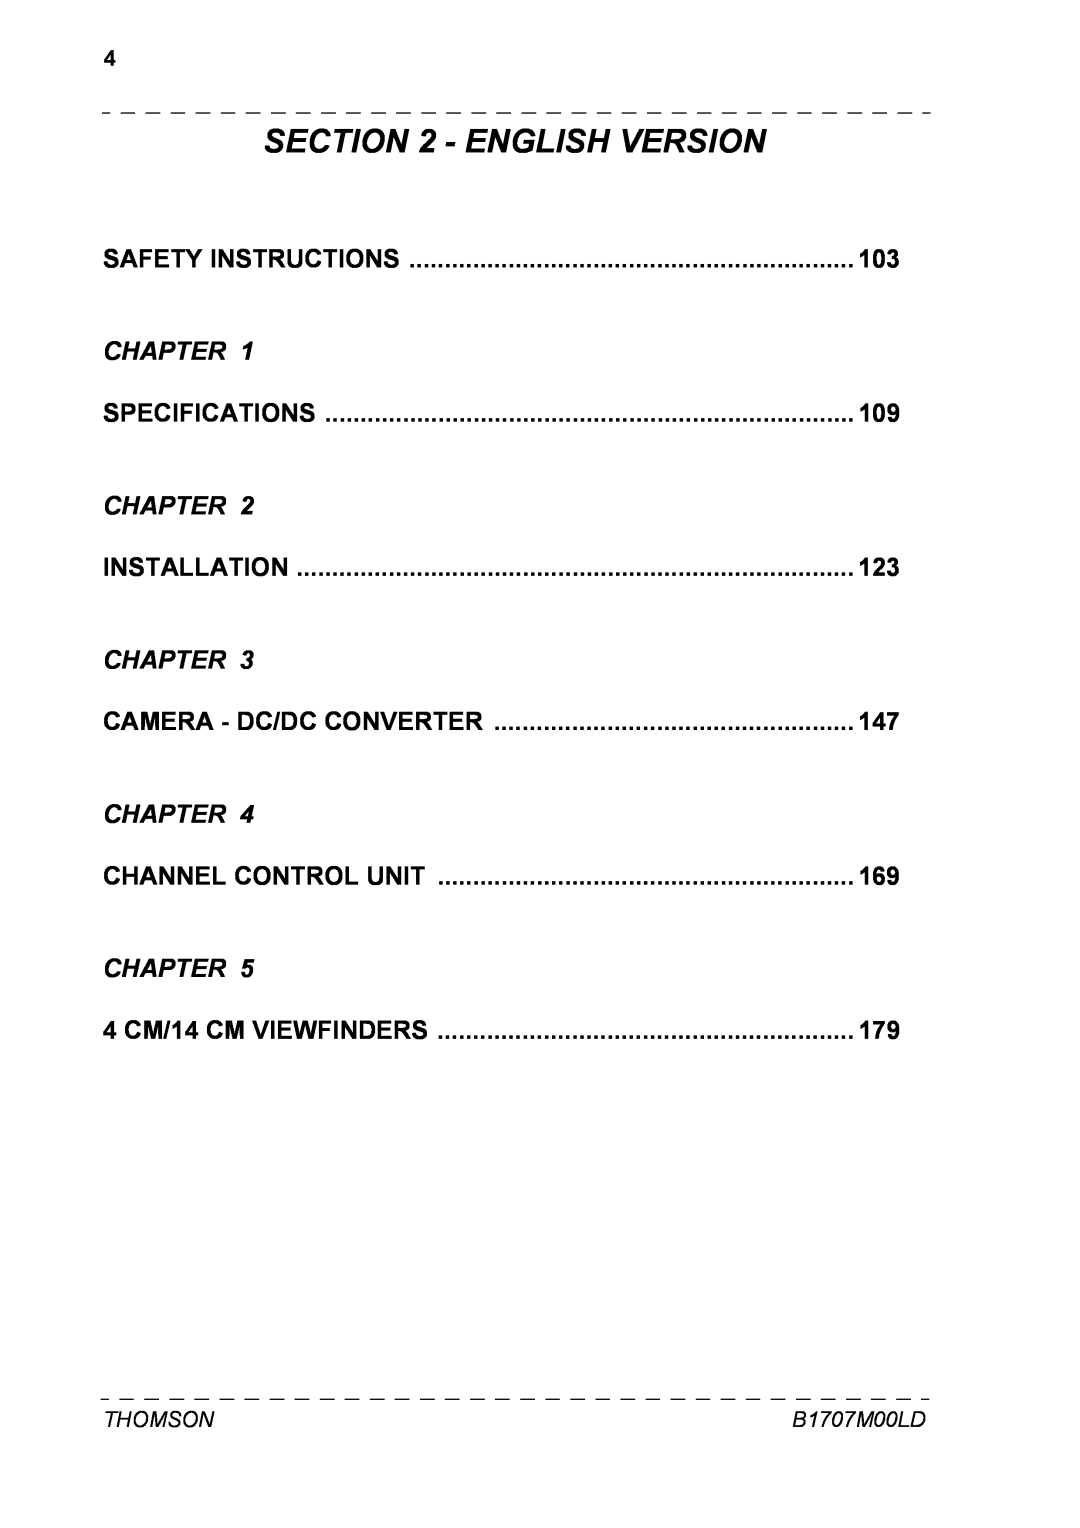 Technicolor - Thomson CCU DT 500, CAMERA TTV 1707 manuel dutilisation English Version, Chapter, Thomson, B1707M00LD 